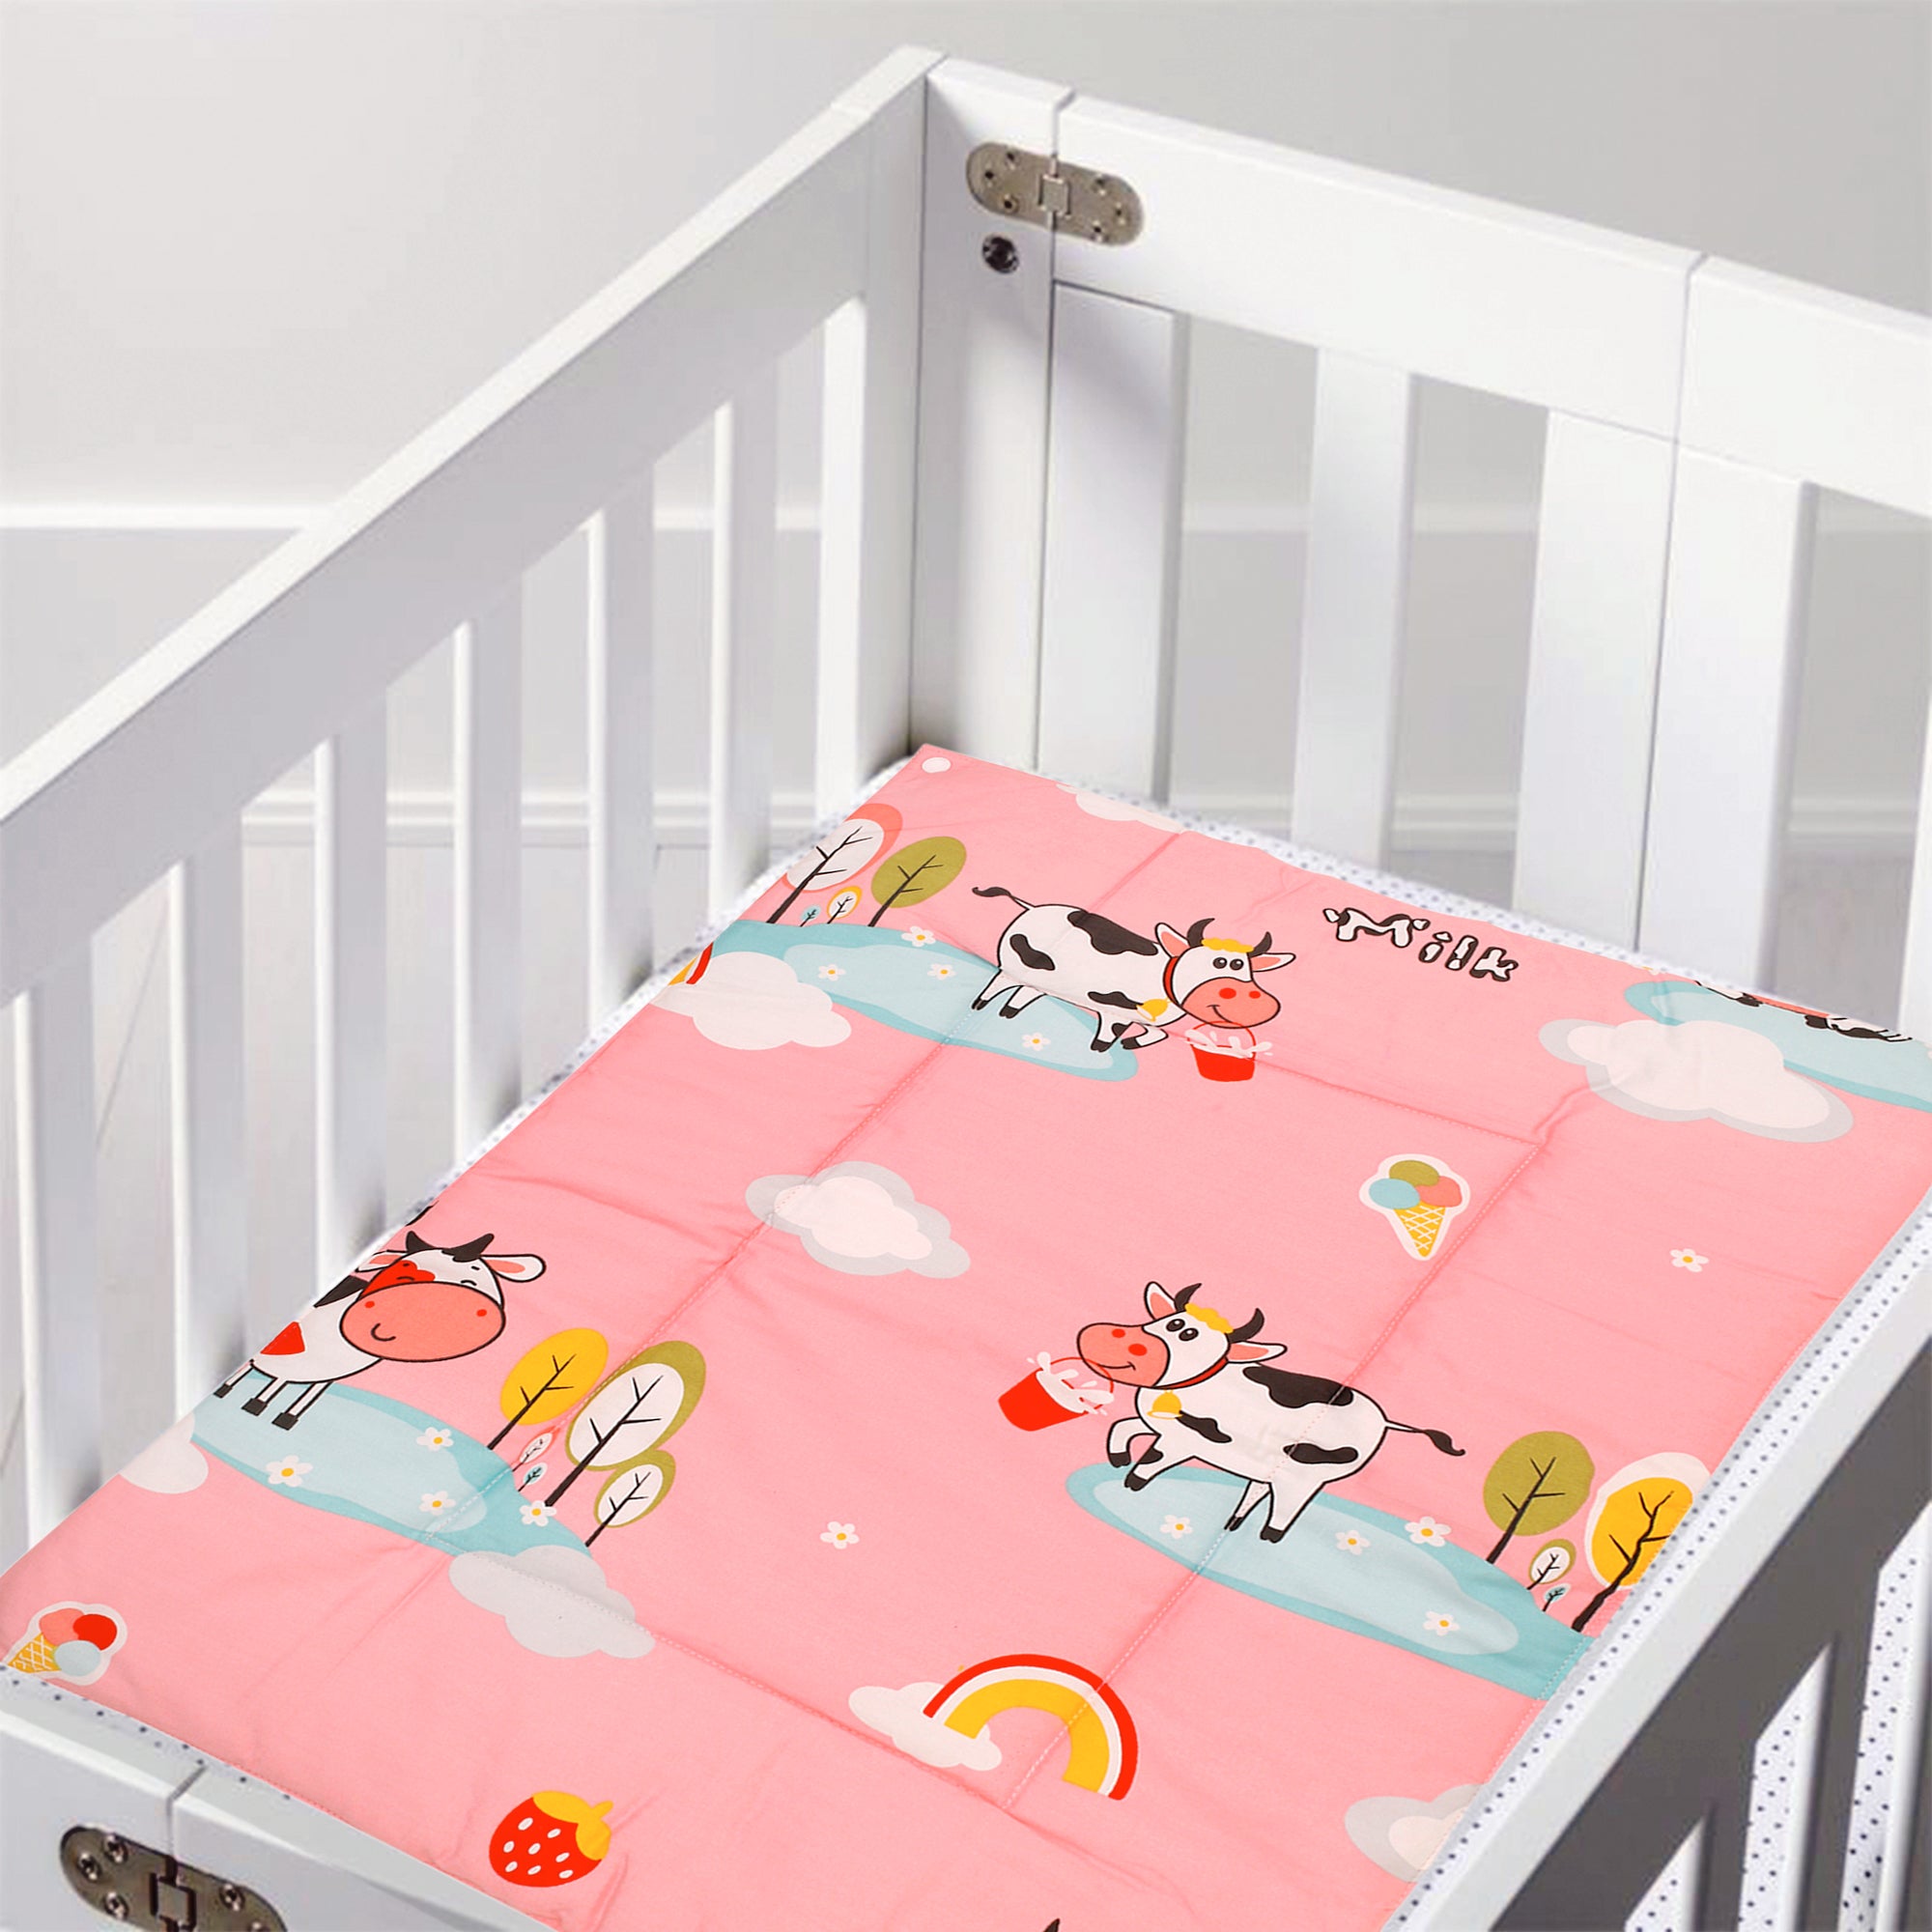 Waterproof Changing Sheet Set Milkaholic Peach - Baby Moo